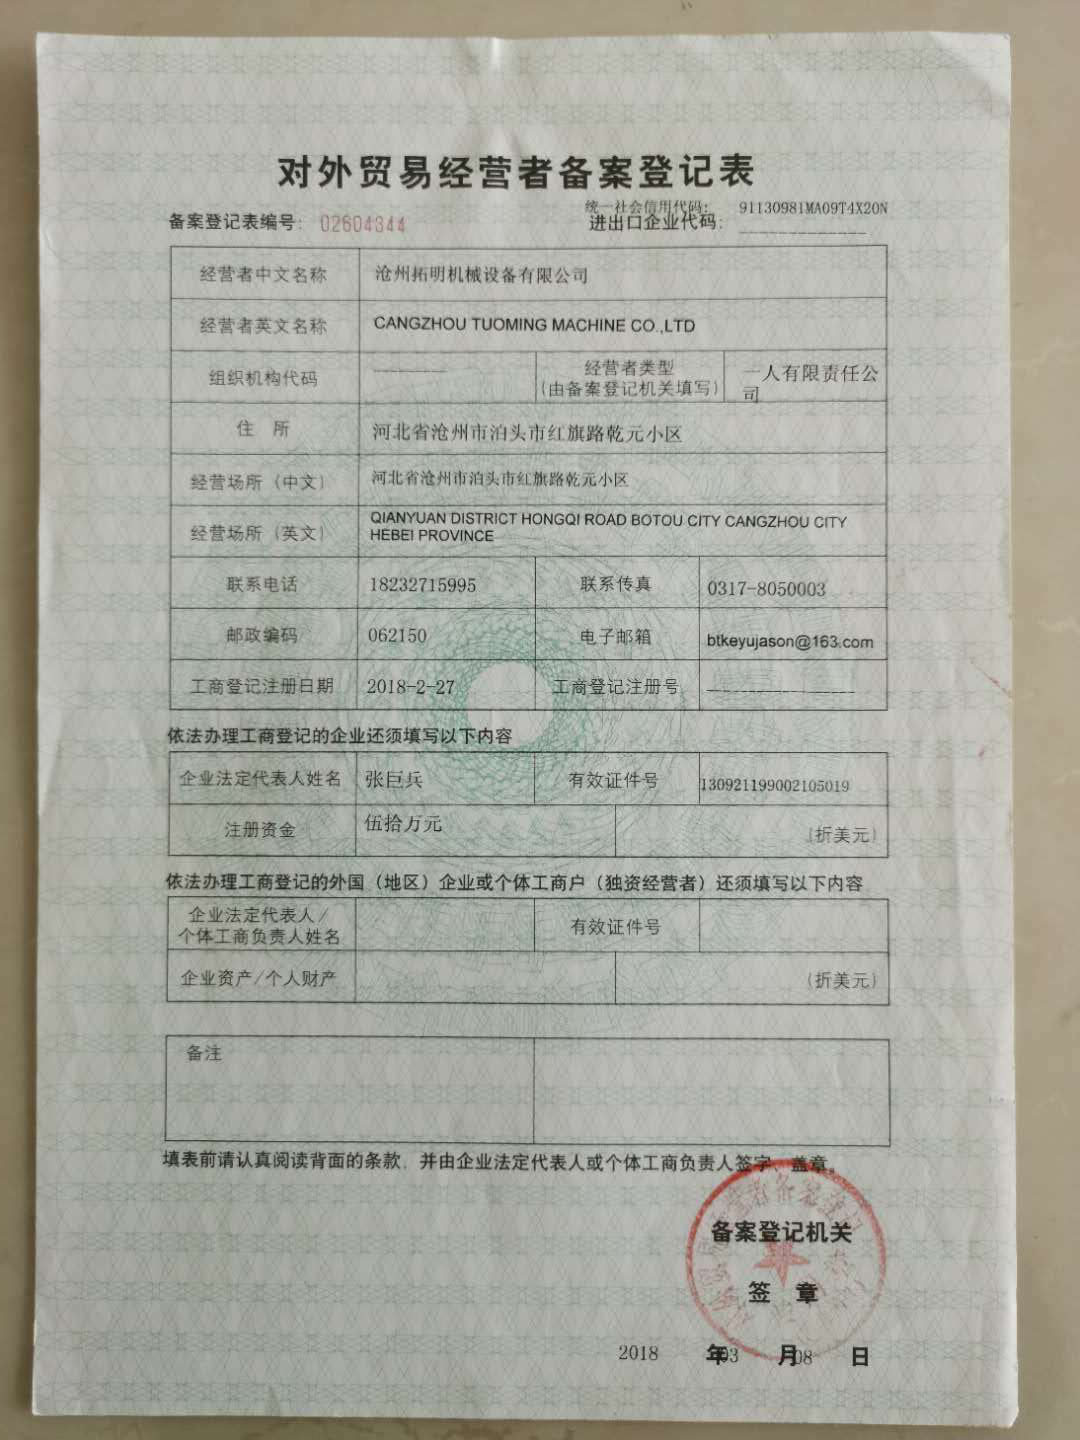 China cangzhou tuoming machine co.,ltd Certification